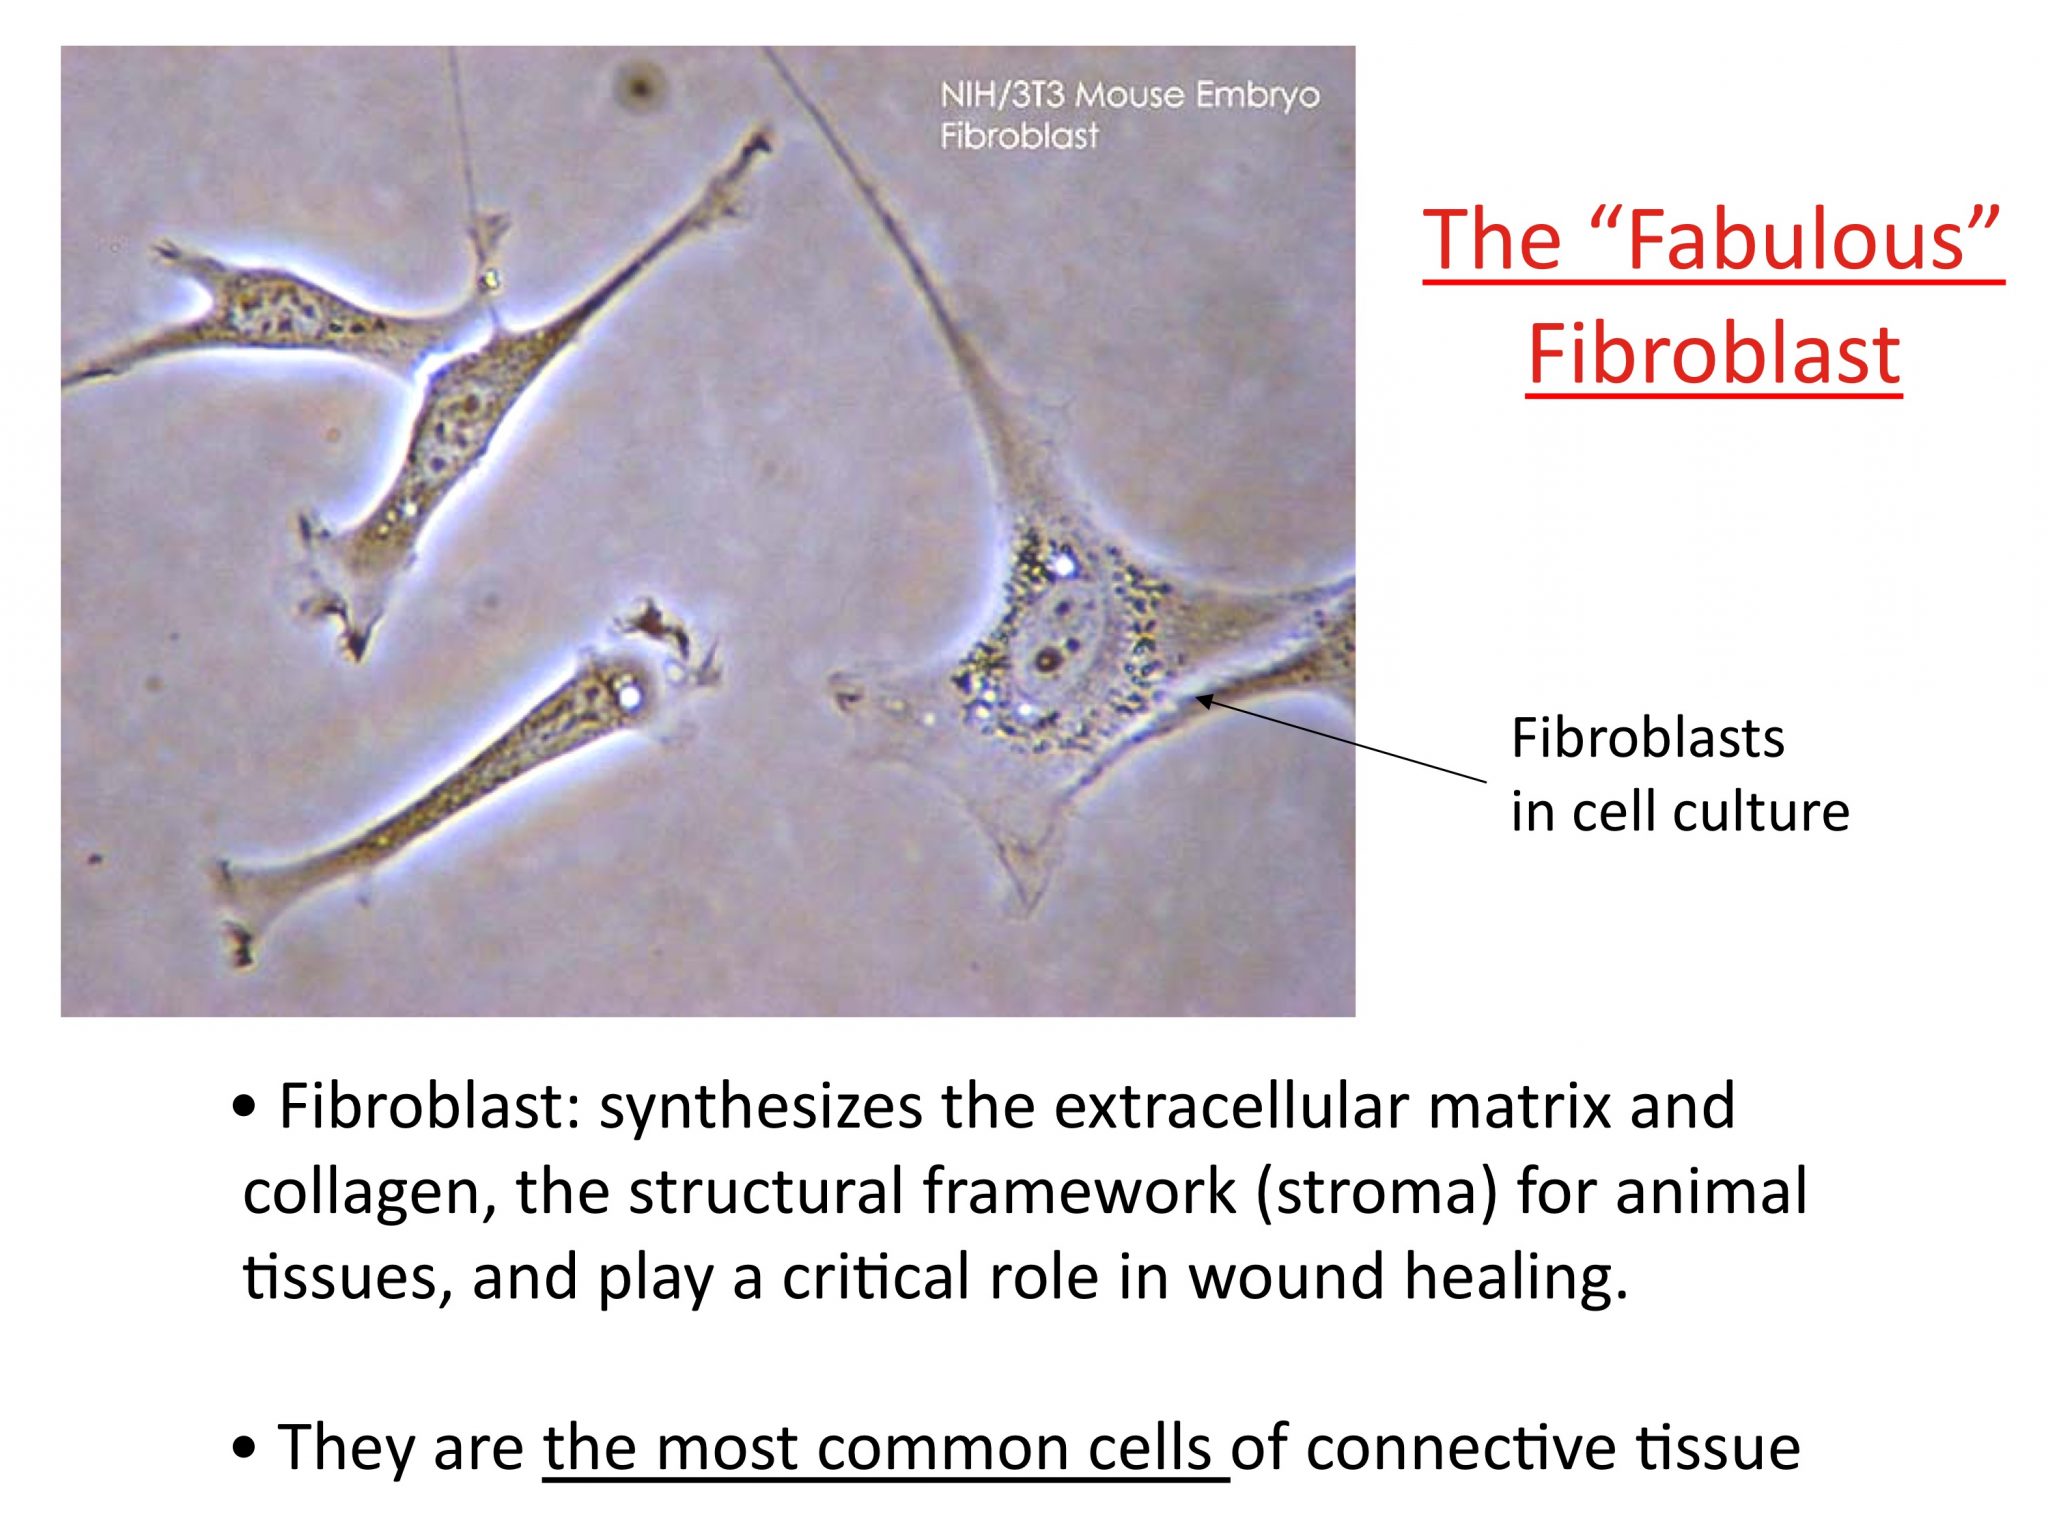 The Fabulous Fibroblast